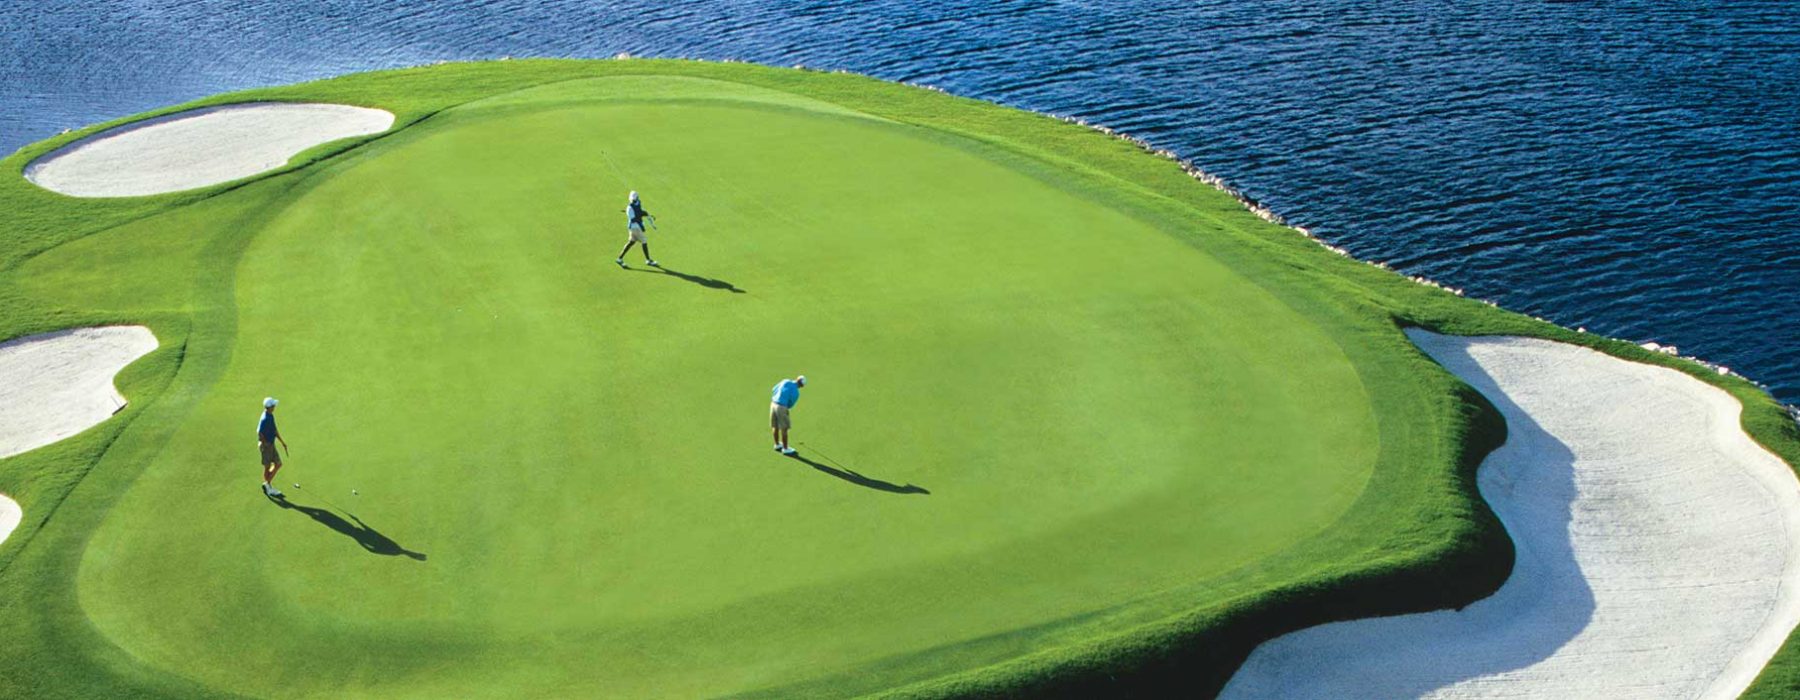 Golf Course Grand Cayman Island